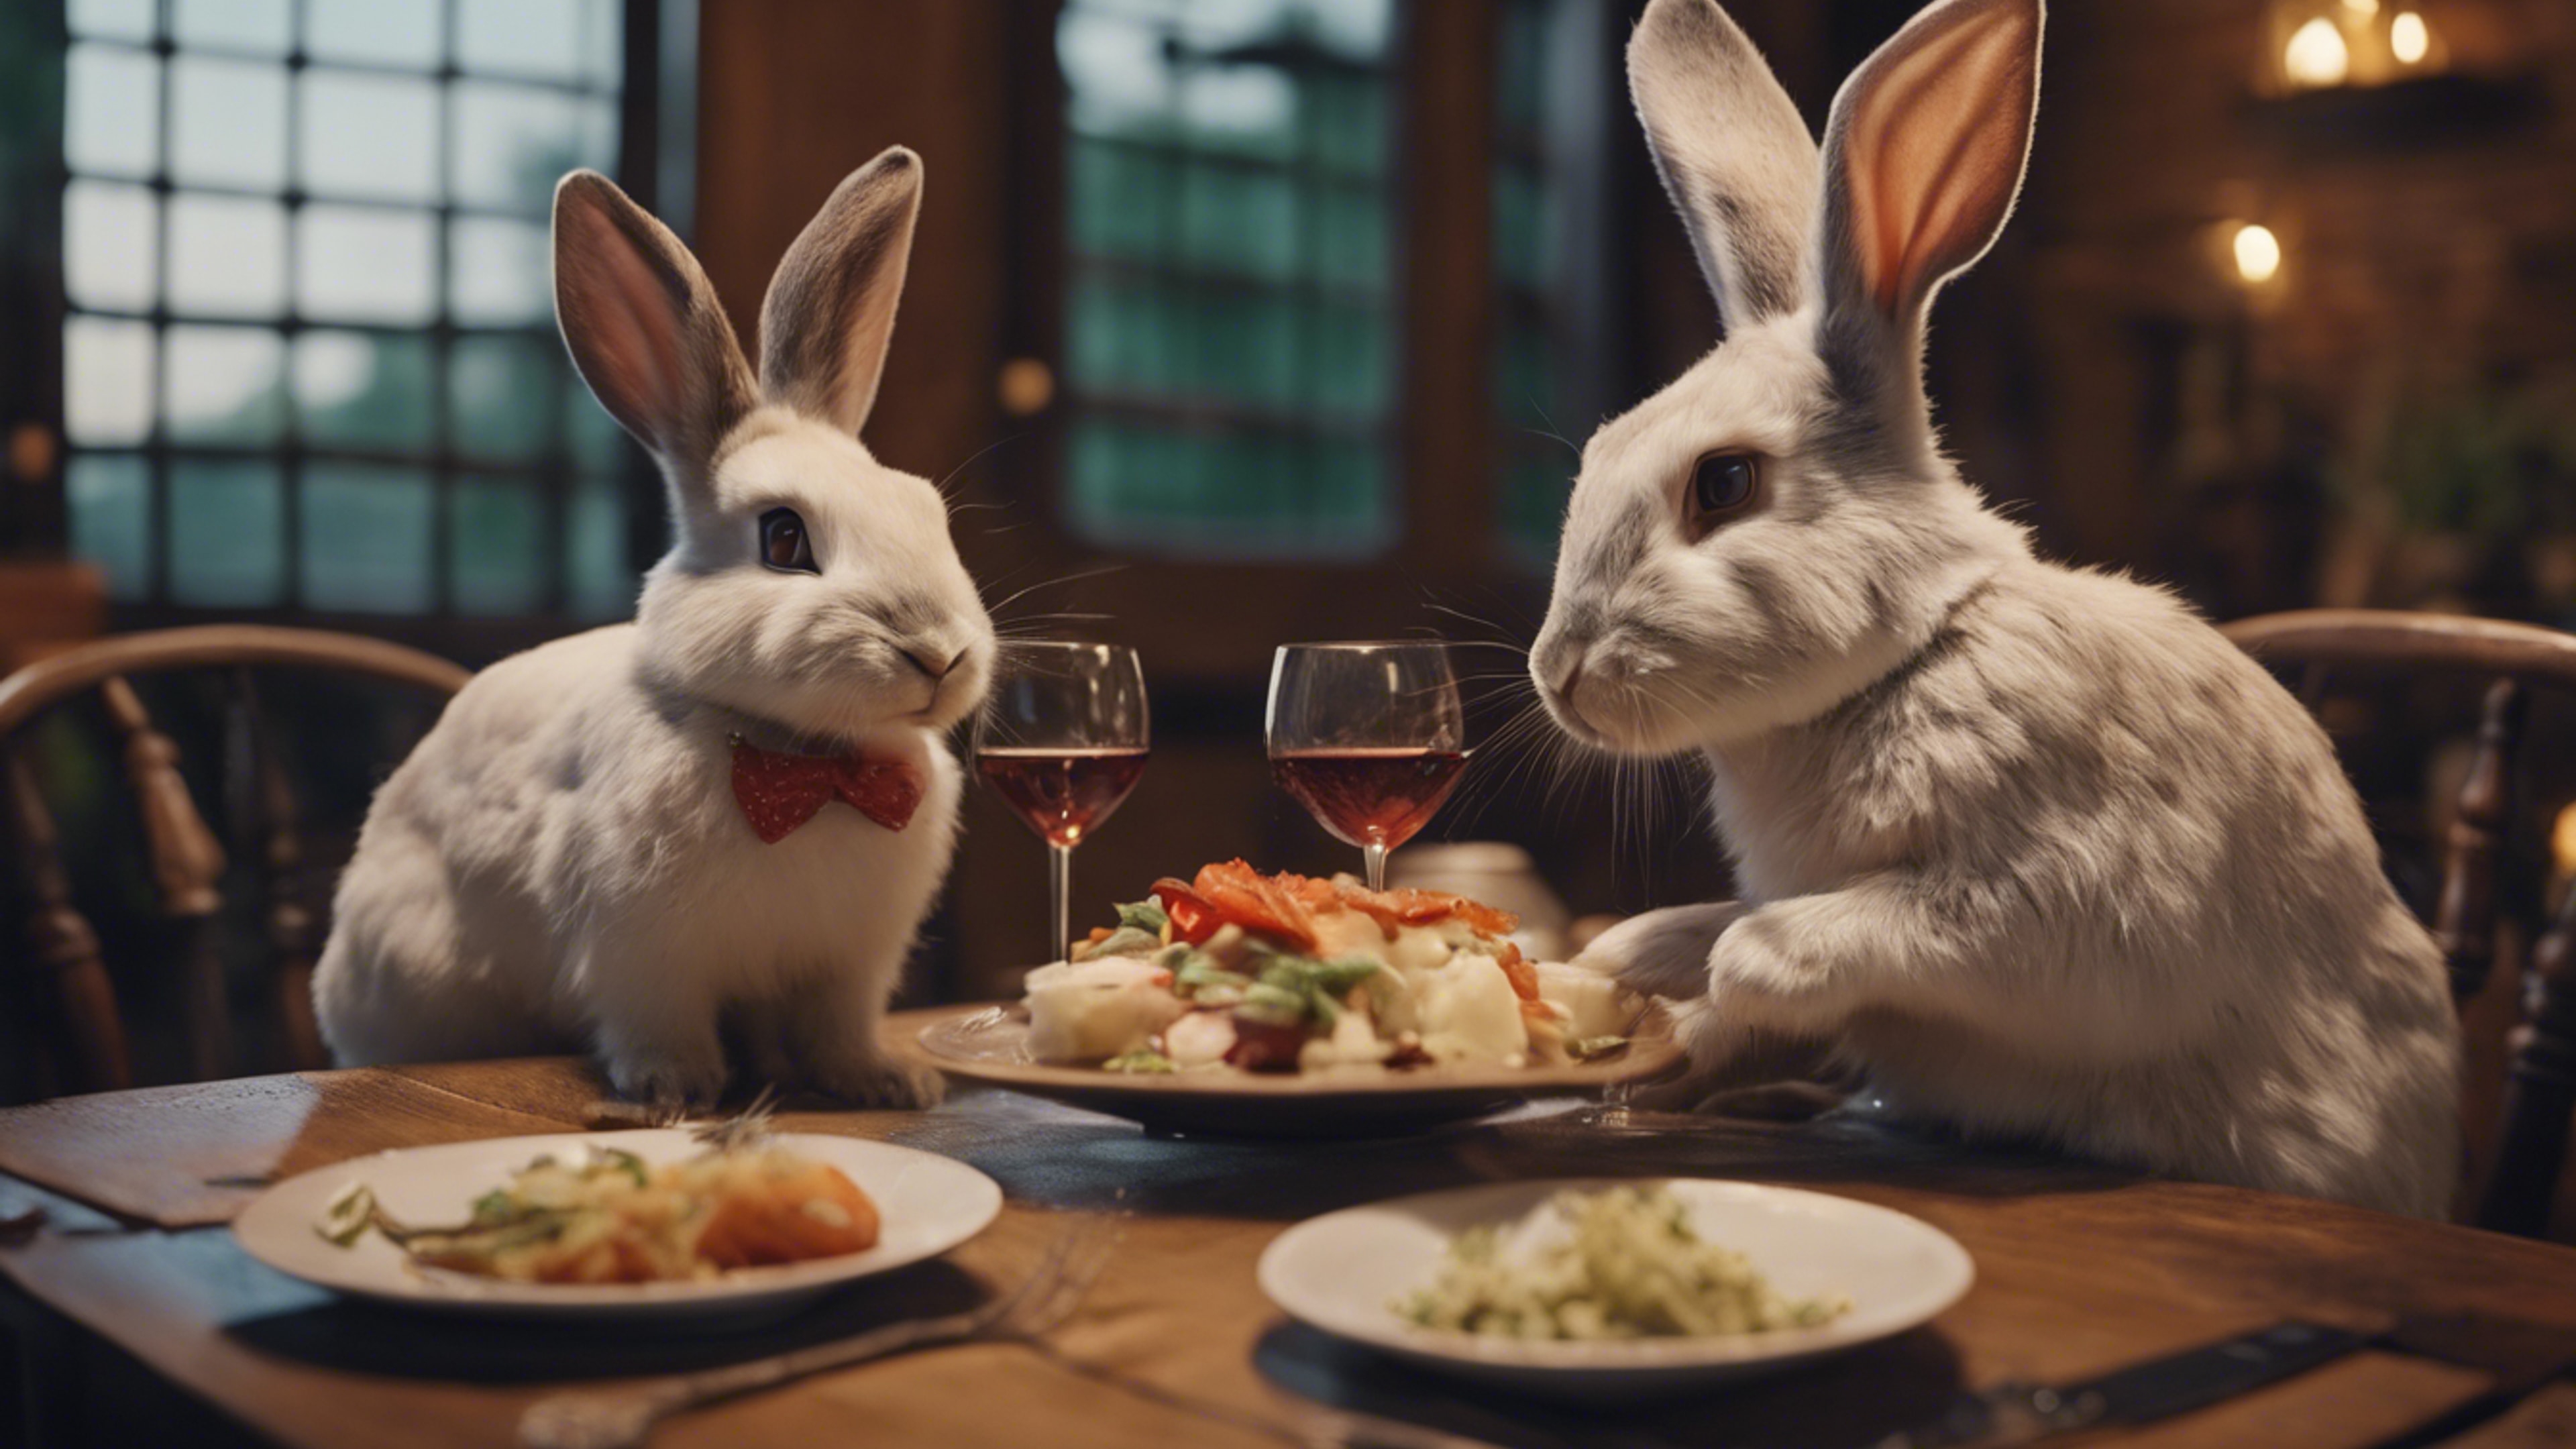 A rabbit couple enjoying a romantic dinner in a quaint, rustic setting. Wallpaper[f4a7594170784844a7a3]